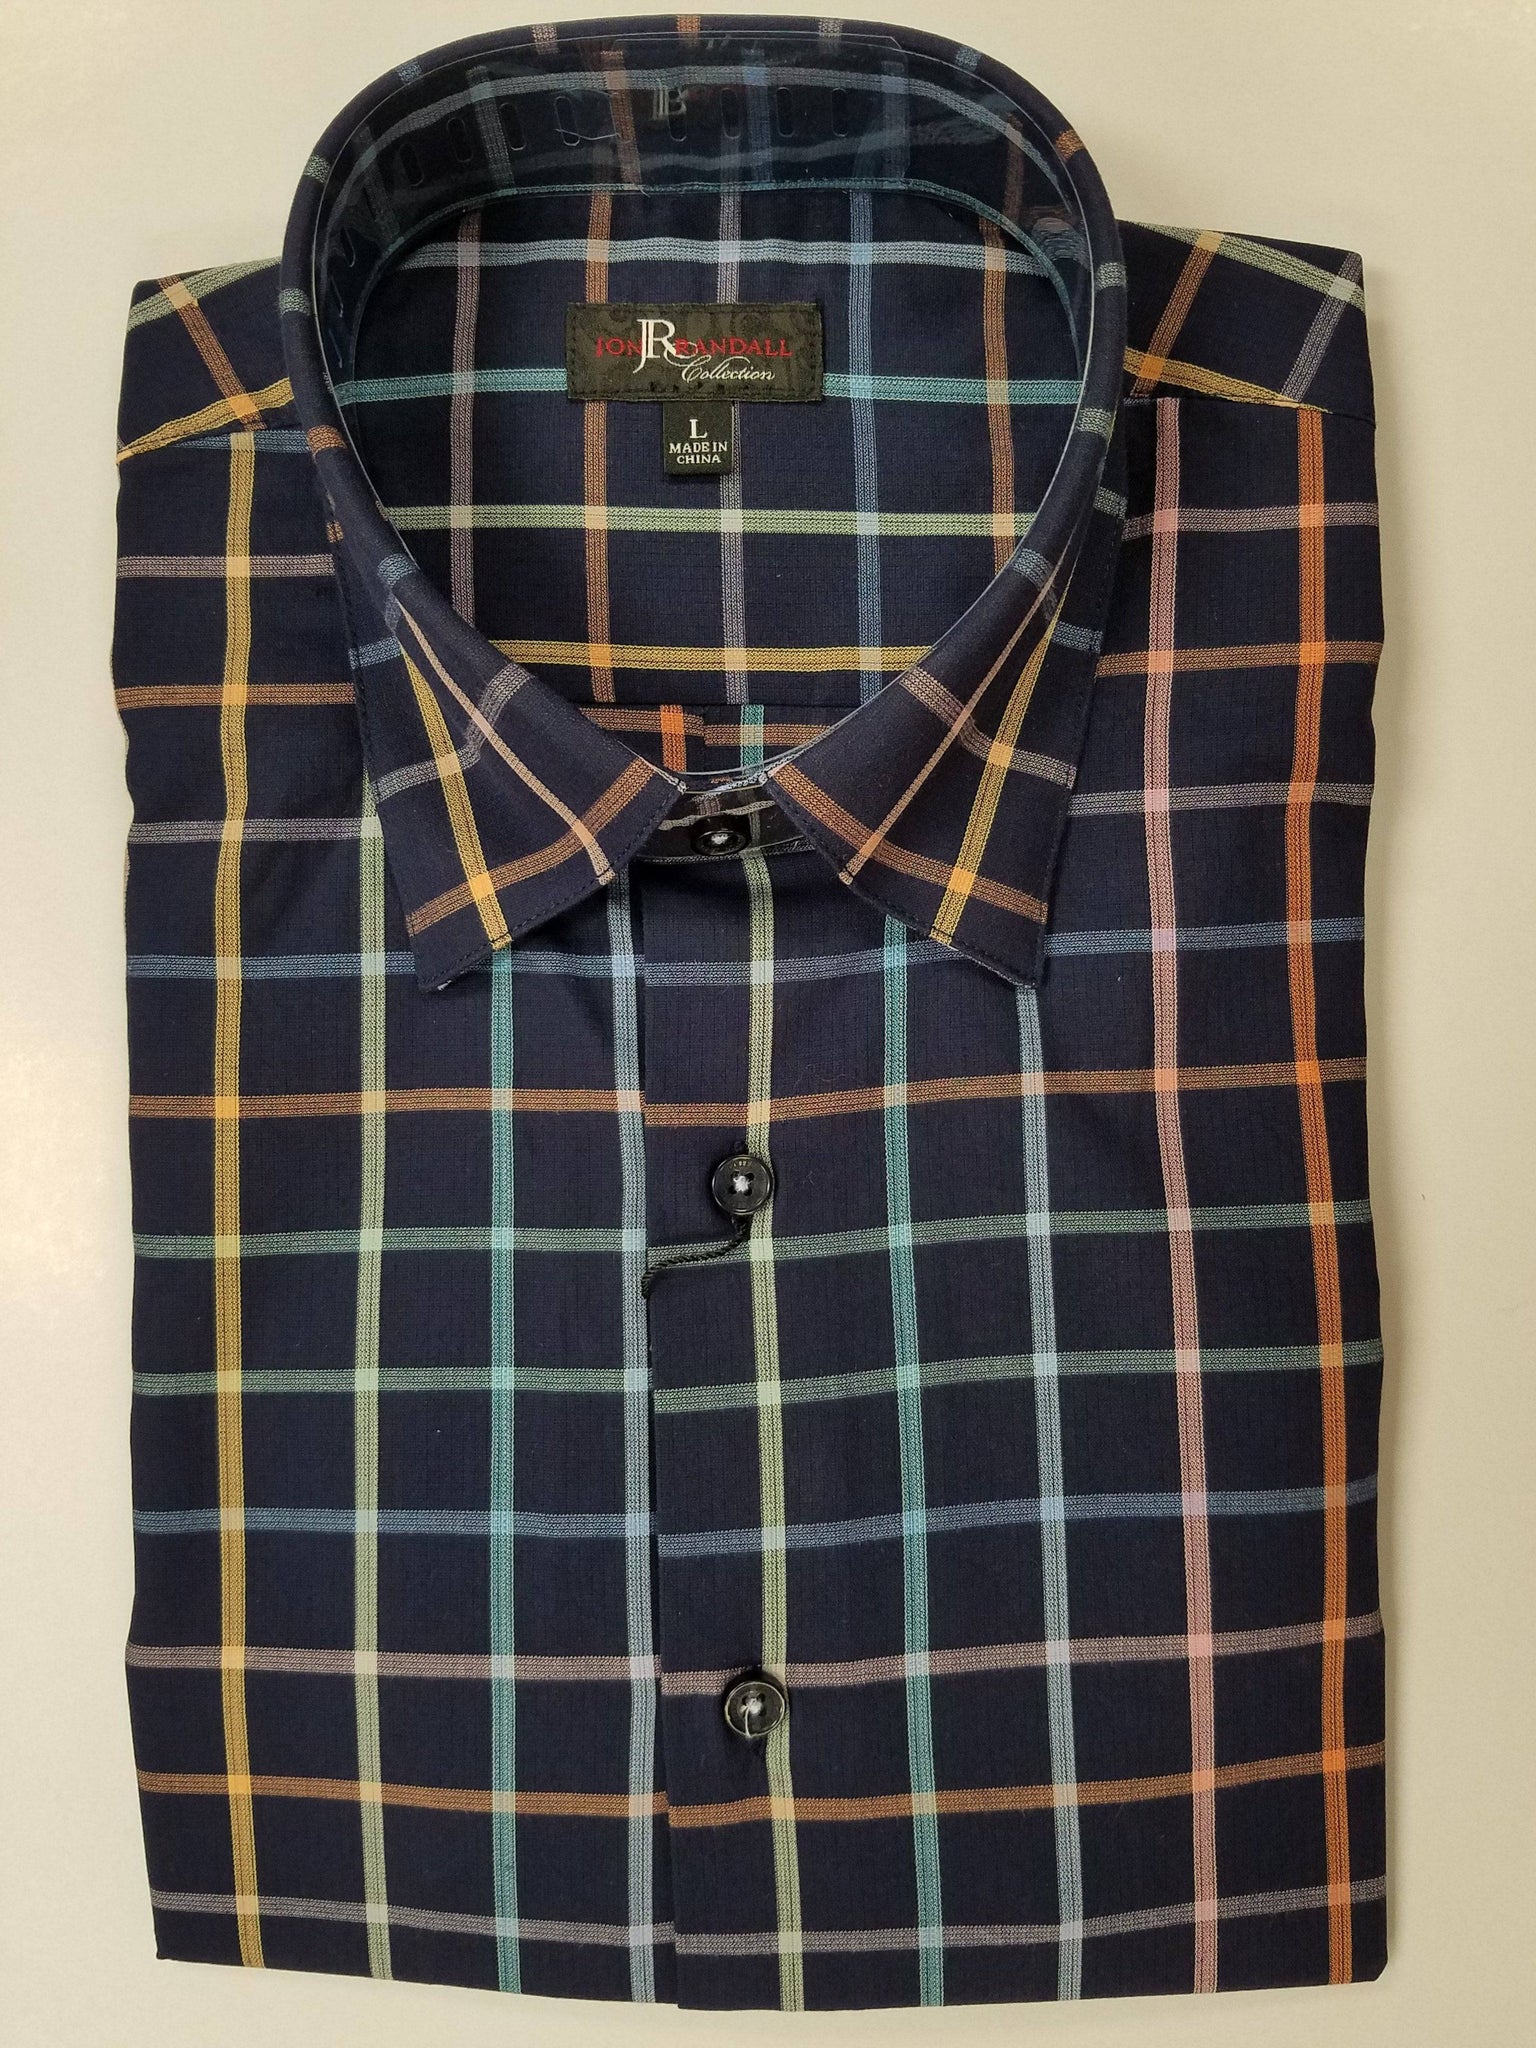 Jon Randall Collection Navy Multi Color Plaid Sport Shirt - Rainwater's Men's Clothing and Tuxedo Rental